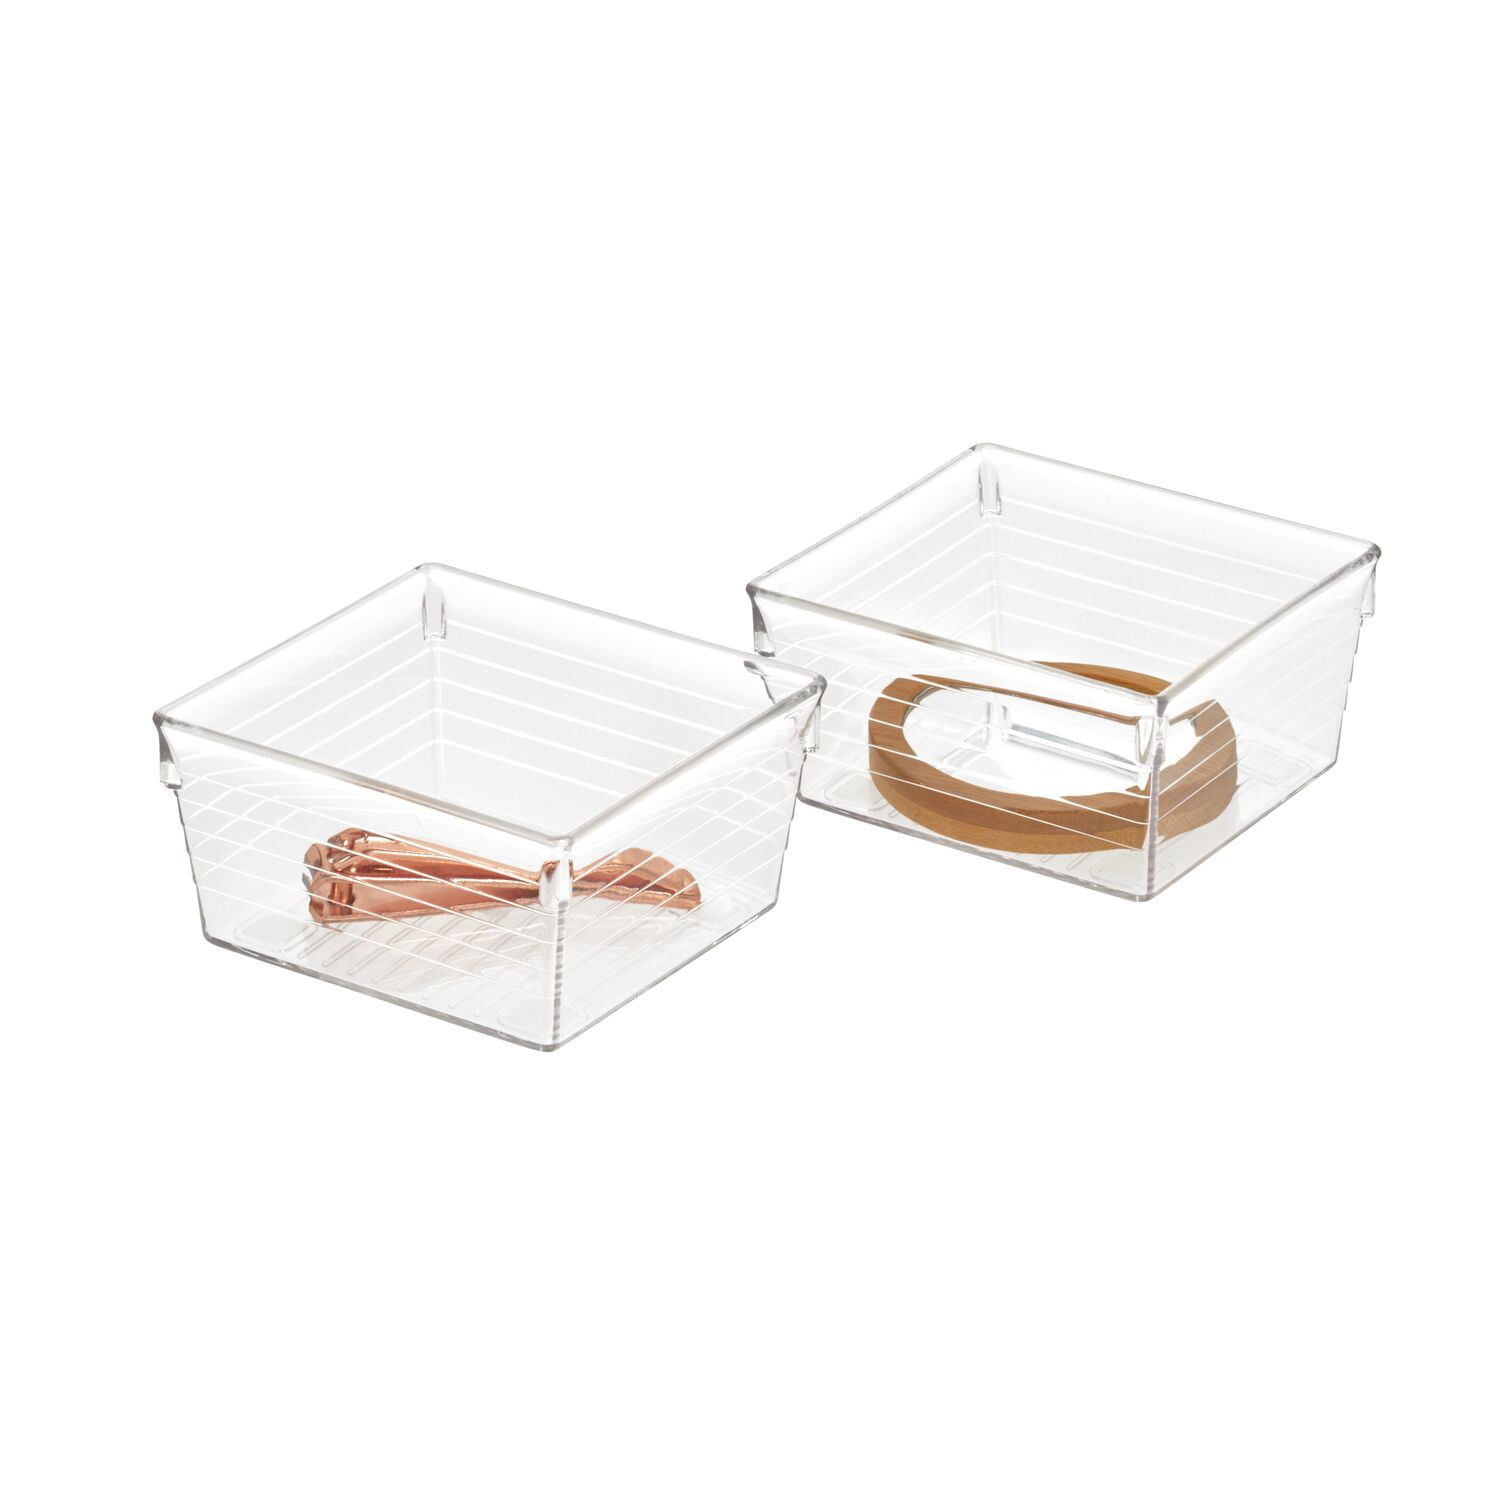 Idesign Drawer Organiser Box Extra Small Drawer Insert Made Of Durable Plastic M 